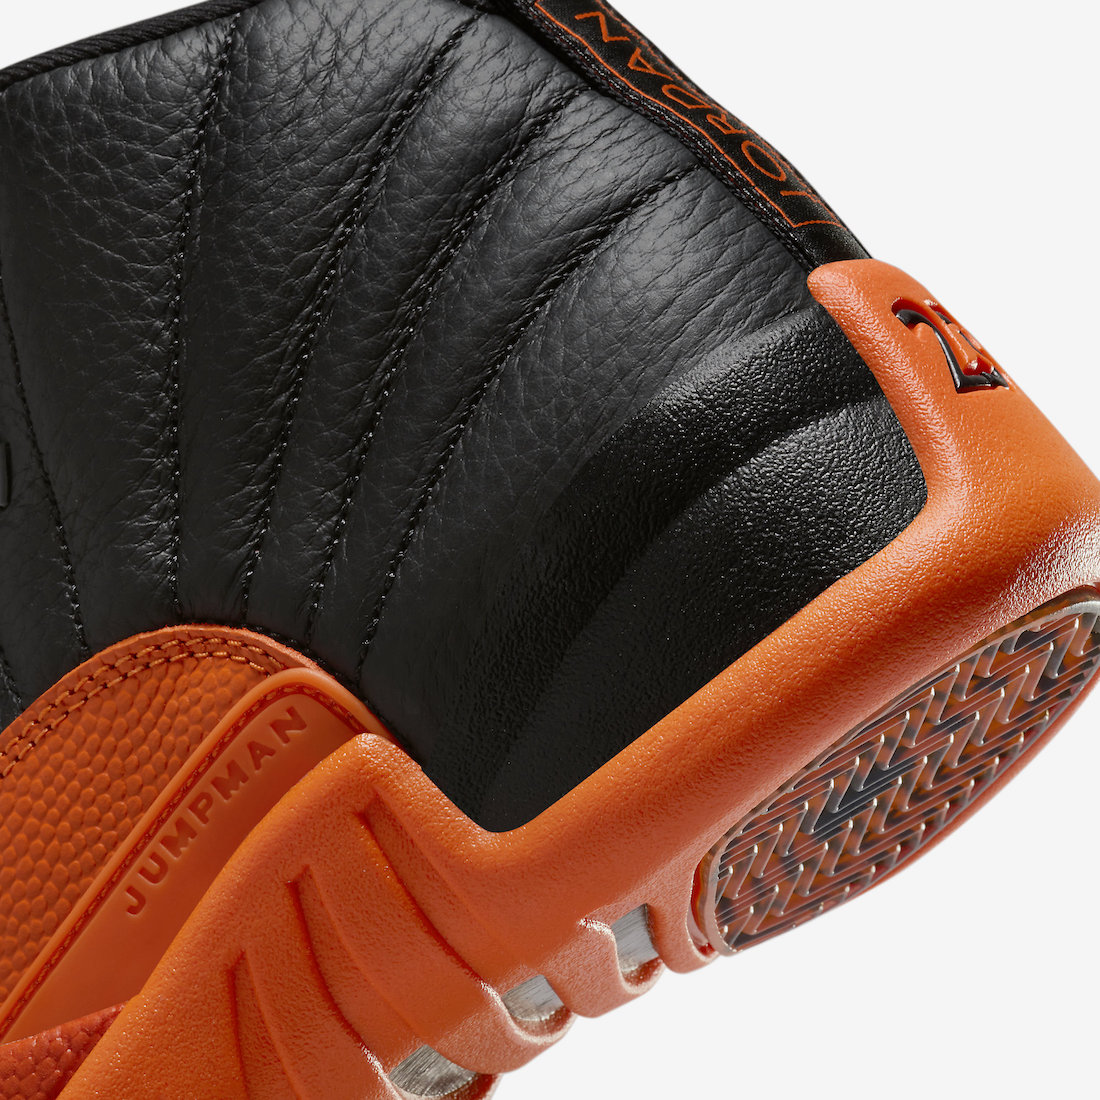 Official Look At The Air Jordan 12 Retro “Brilliant Orange”